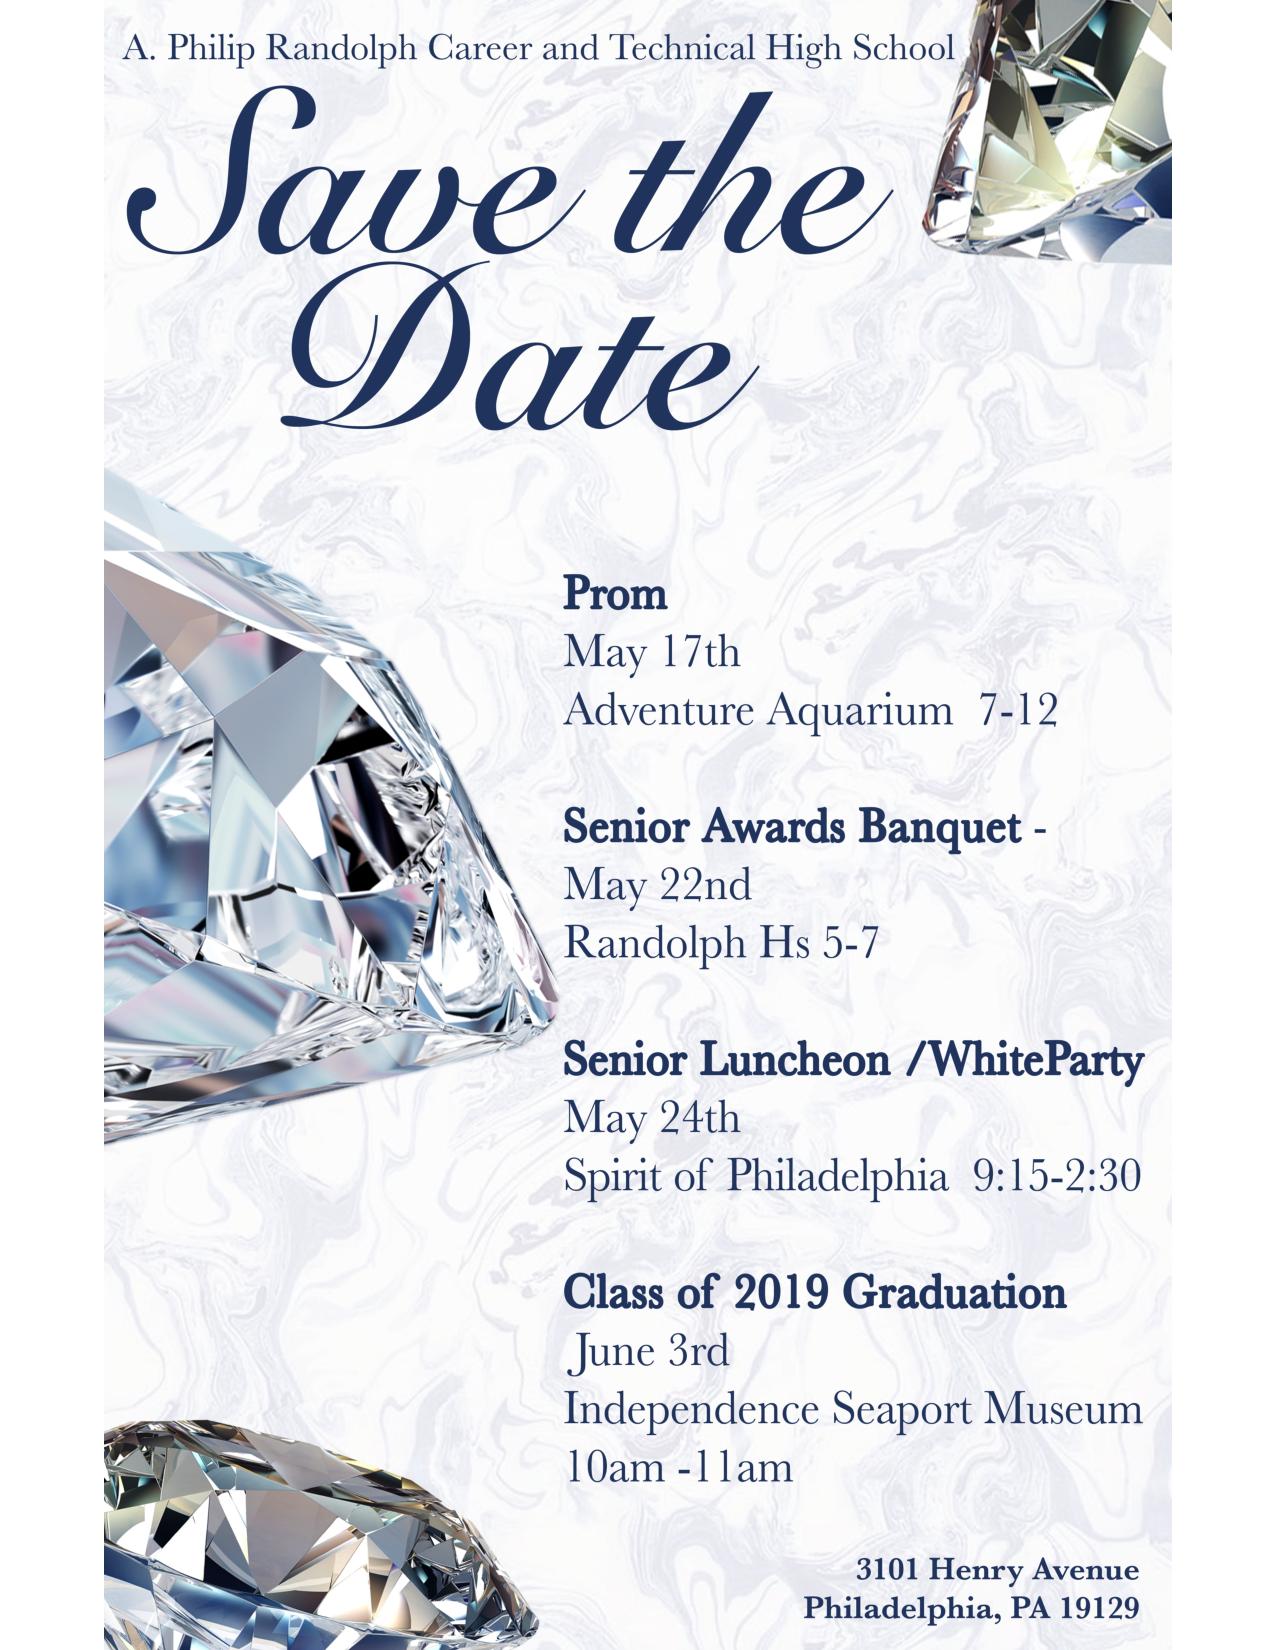 Upcoming dates including Prom (5/17 @ Adventure Aquarium, Camden, NJ from 7-12), Senior Awards Banquet (5/22 @ Randolph H.S. from 5-7)